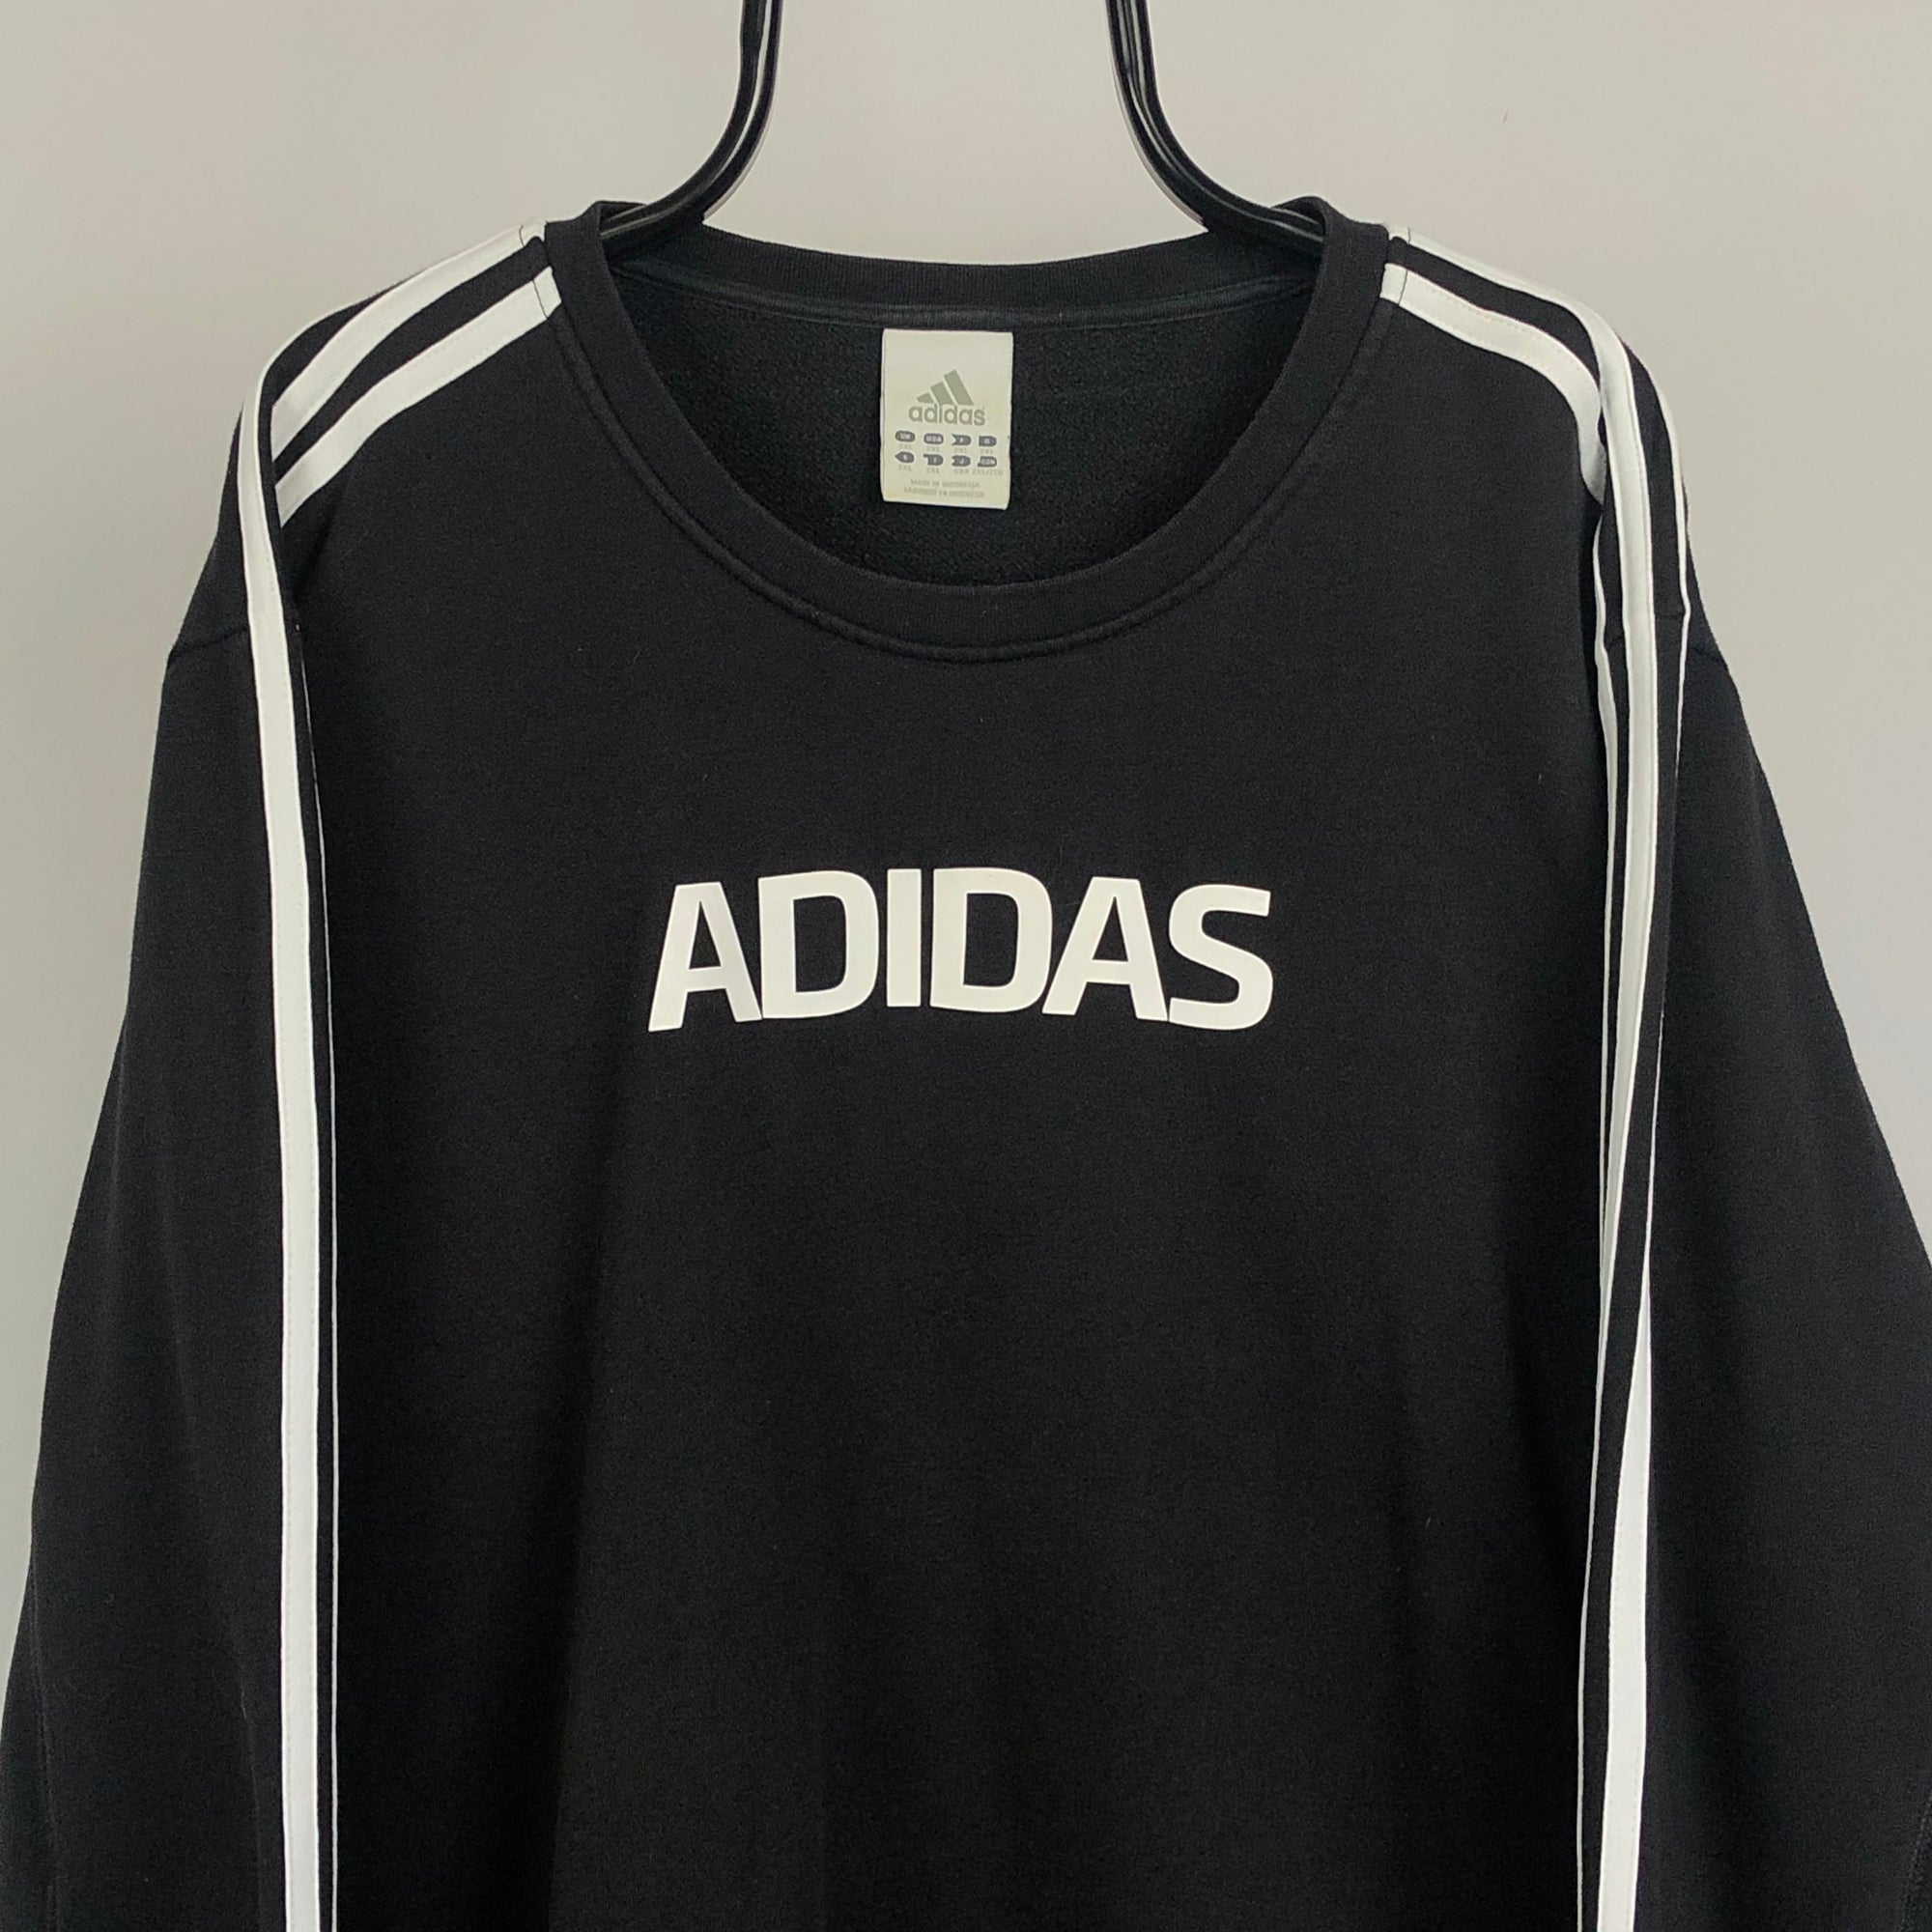 Vintage Adidas Spellout Sweatshirt in Black - Men's XXL/Women's XXXL